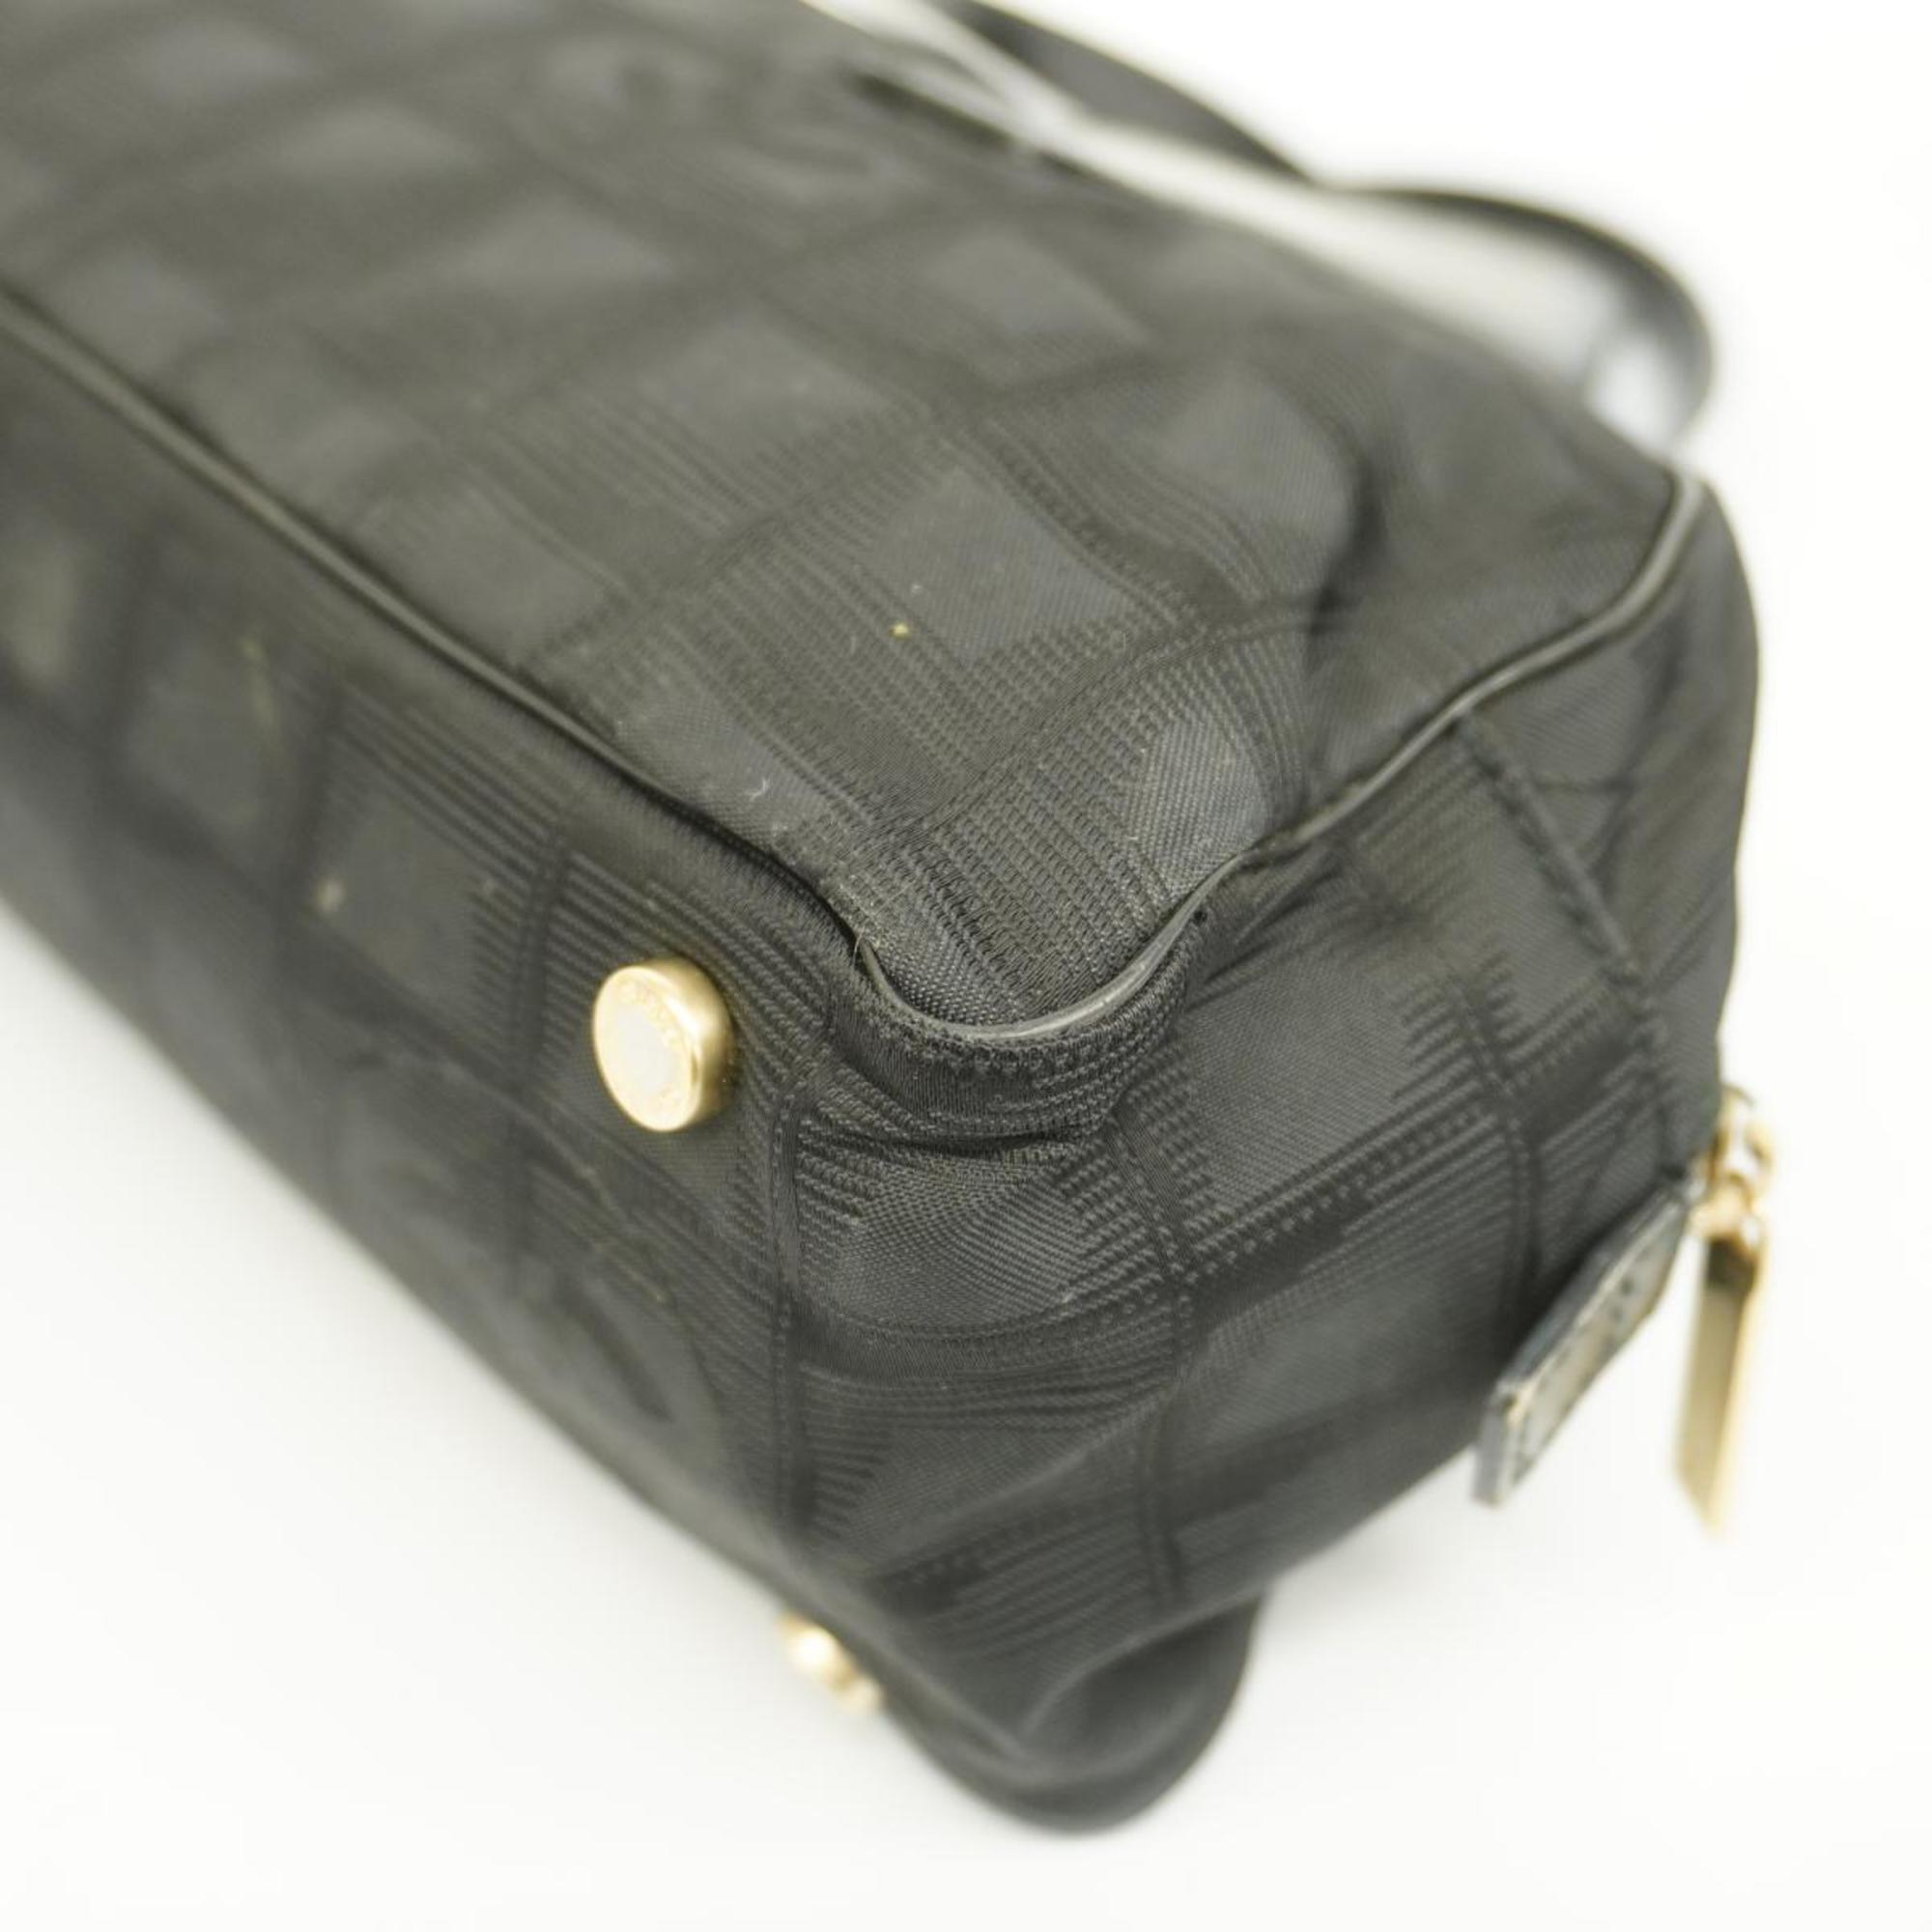 Chanel handbag new travel nylon black ladies